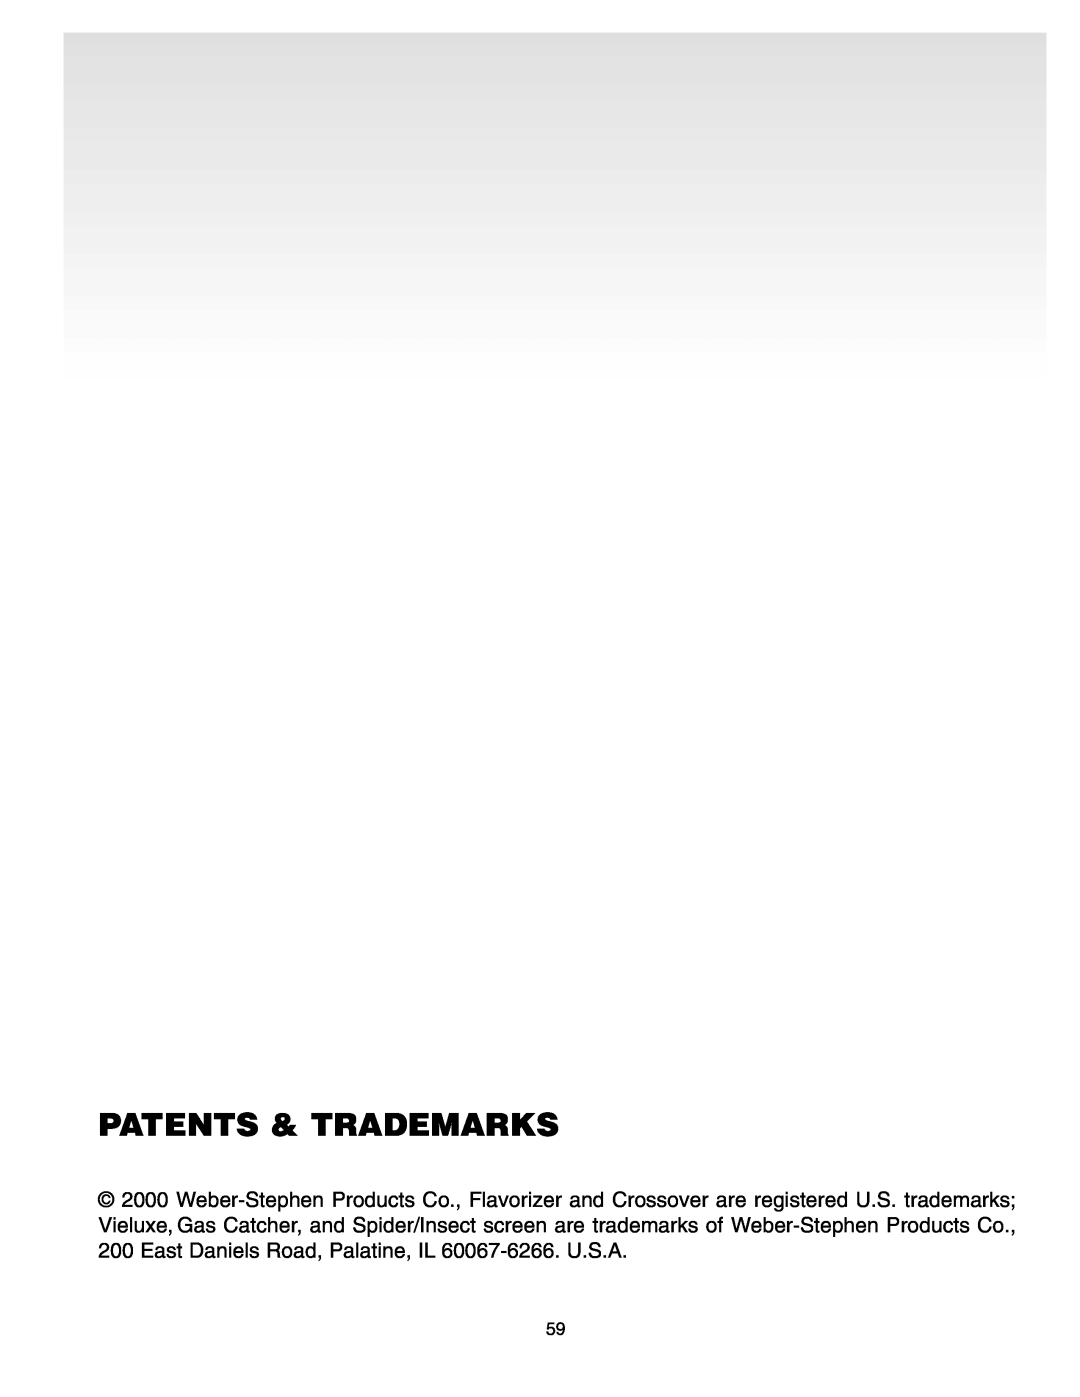 Weber Gas Burner manual Patents & Trademarks 